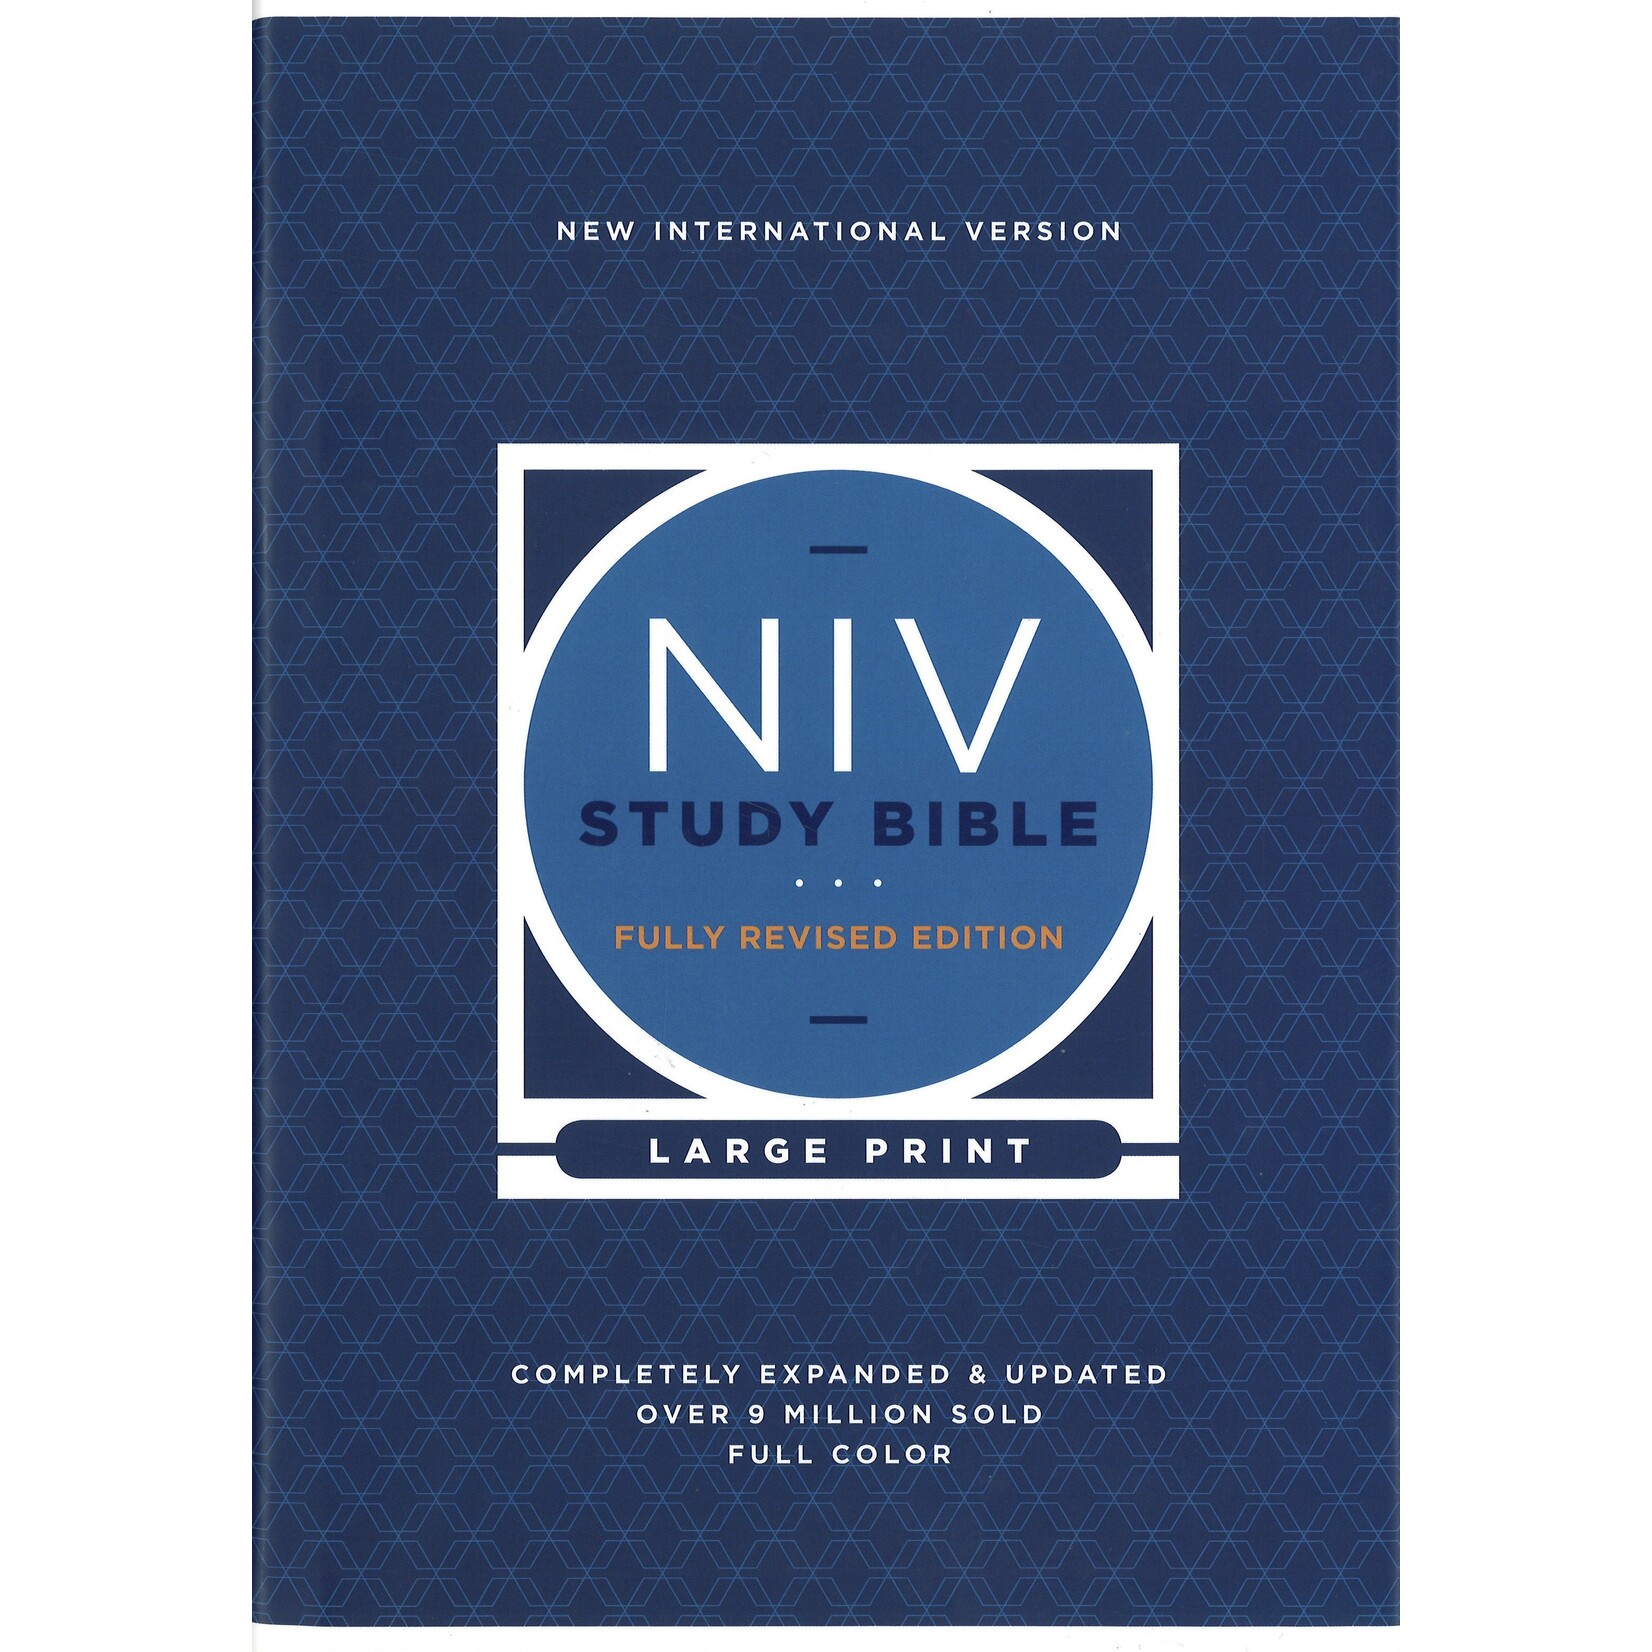 NIV LARGE PRINT STUDY BIBLE FULLY REVISED HC